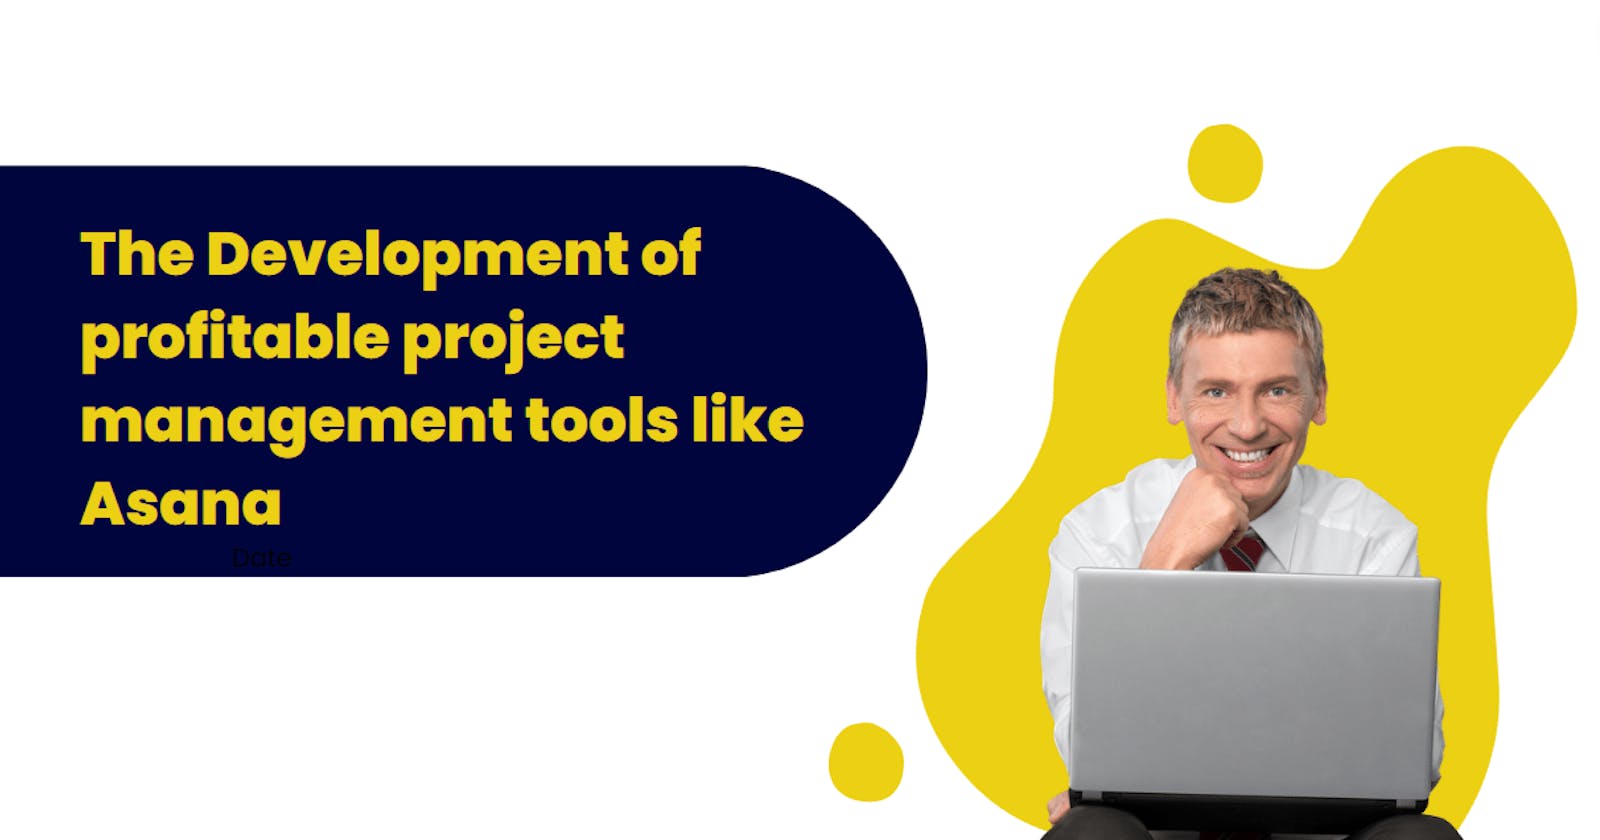 The Development of profitable project management tools like Asana